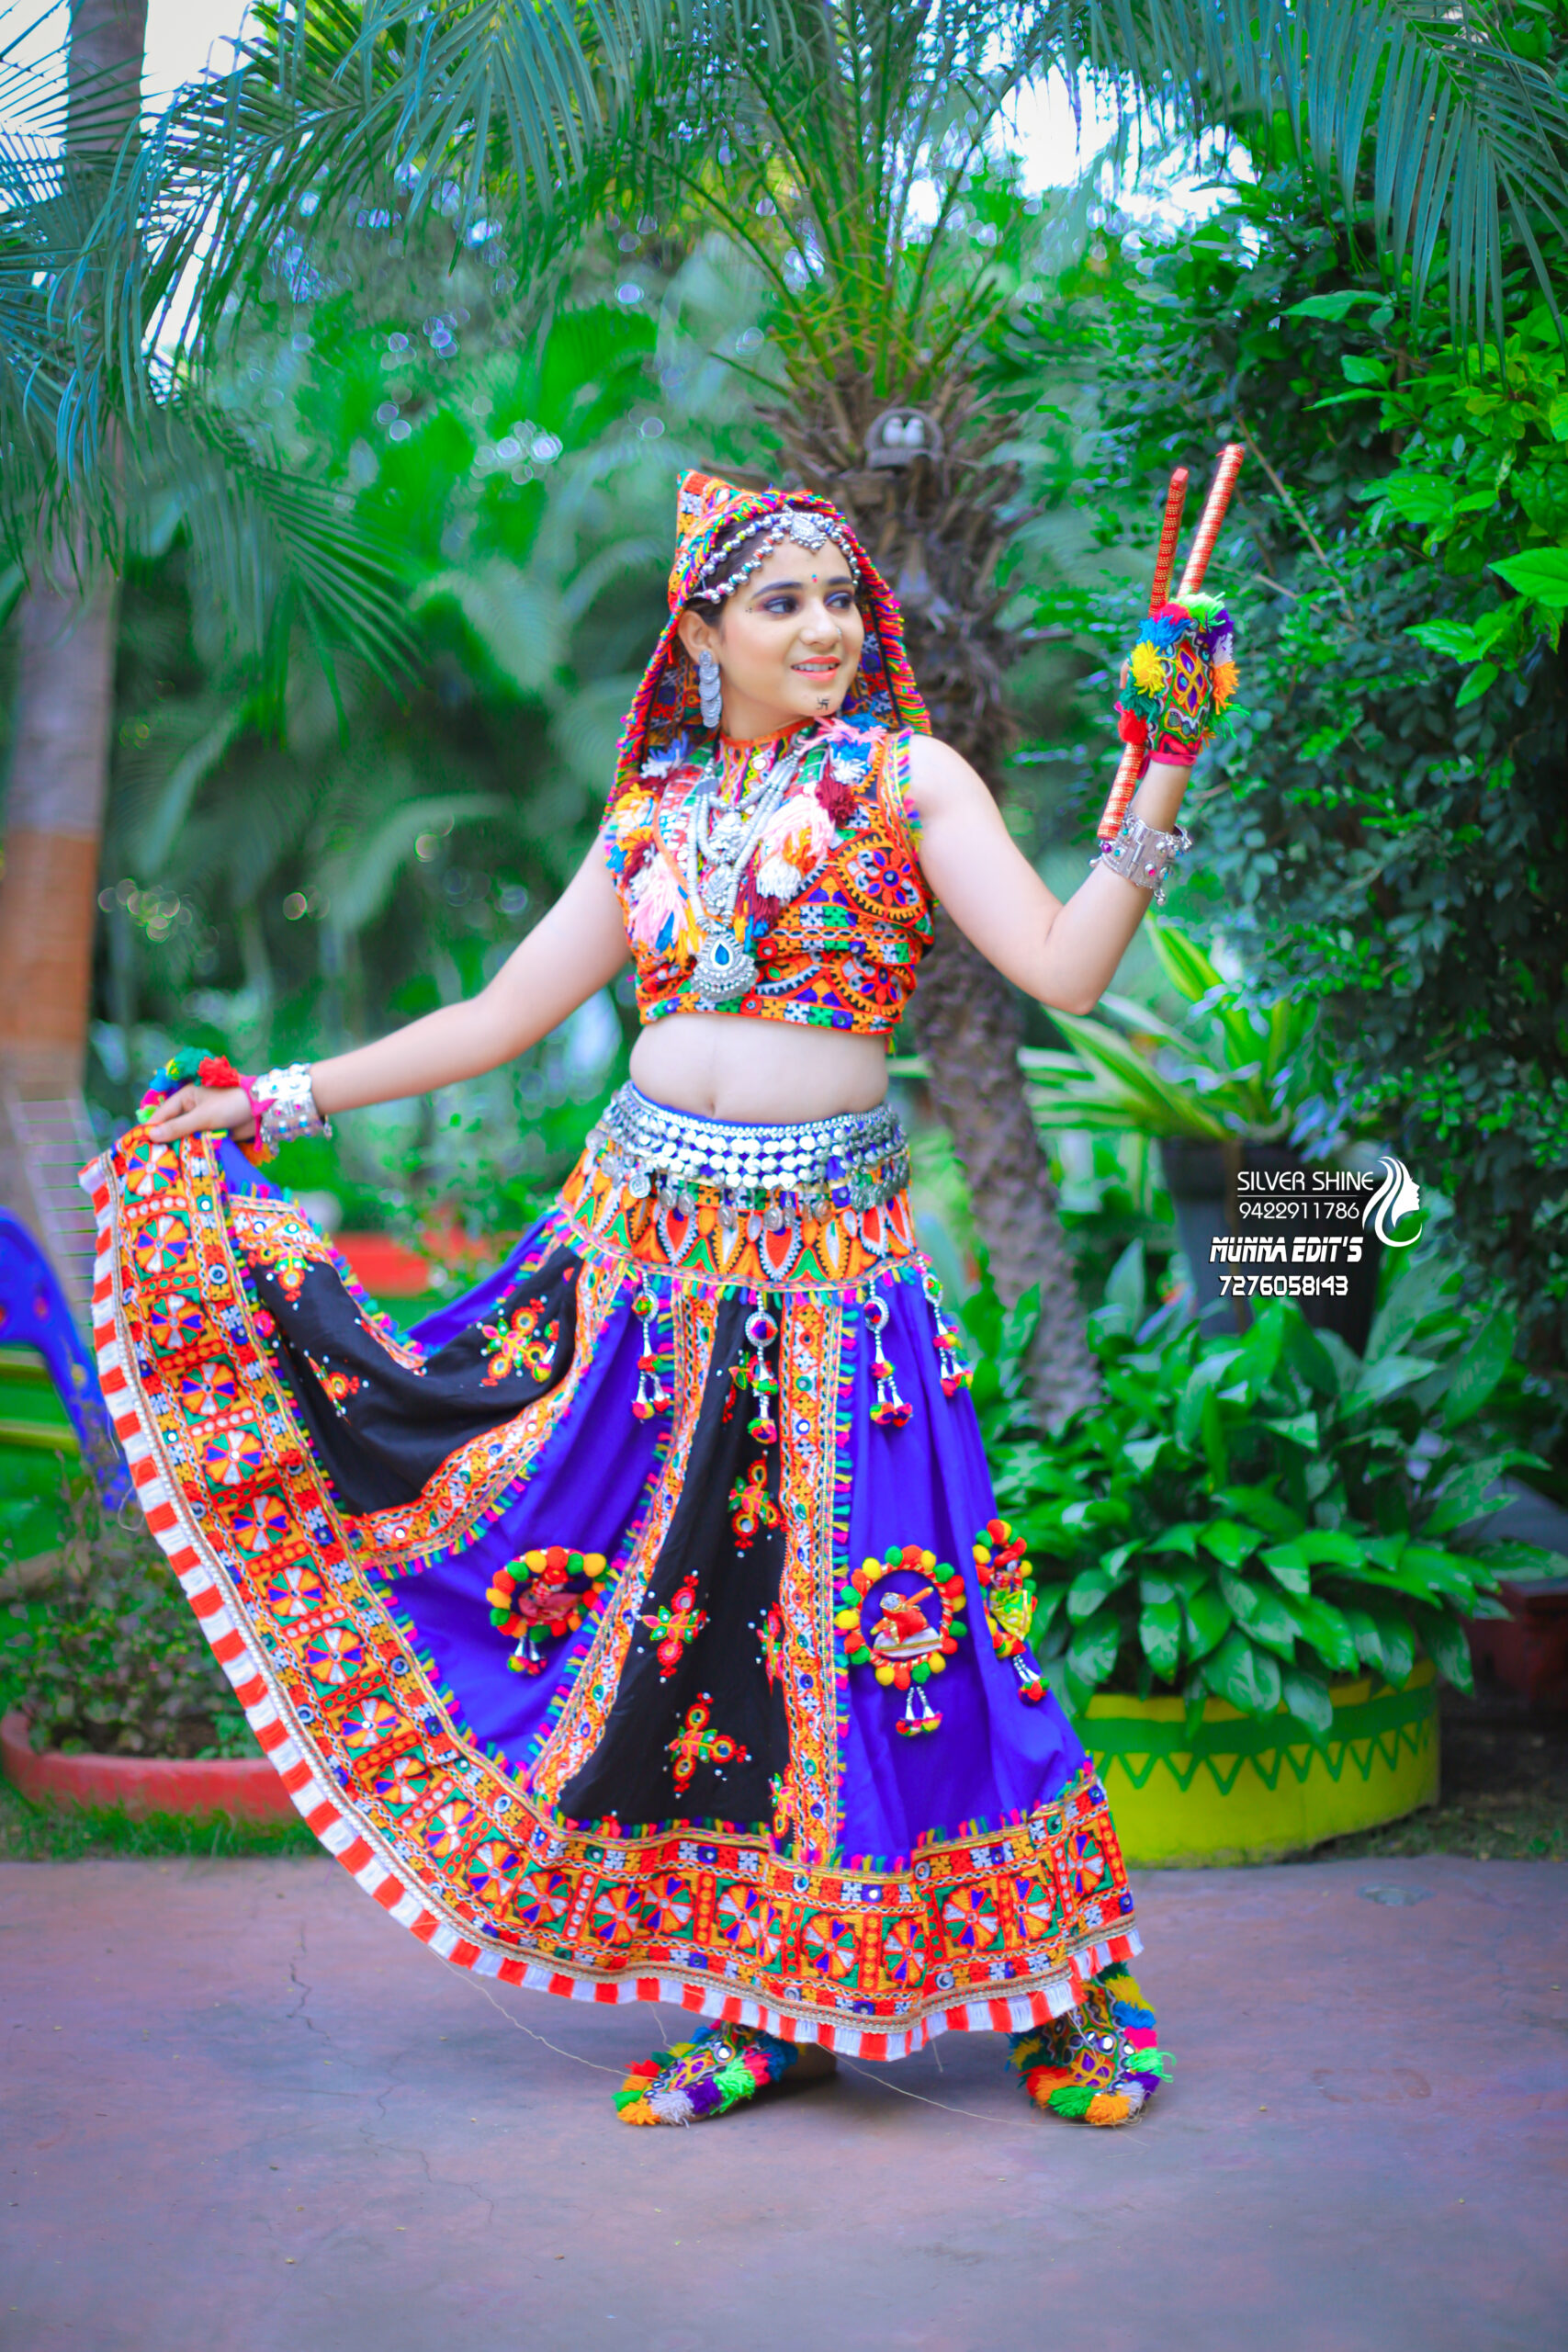 Dodhiya 6 Step Garba Tutorial | Learn Garba With Nrityakala Dance Studio -  YouTube